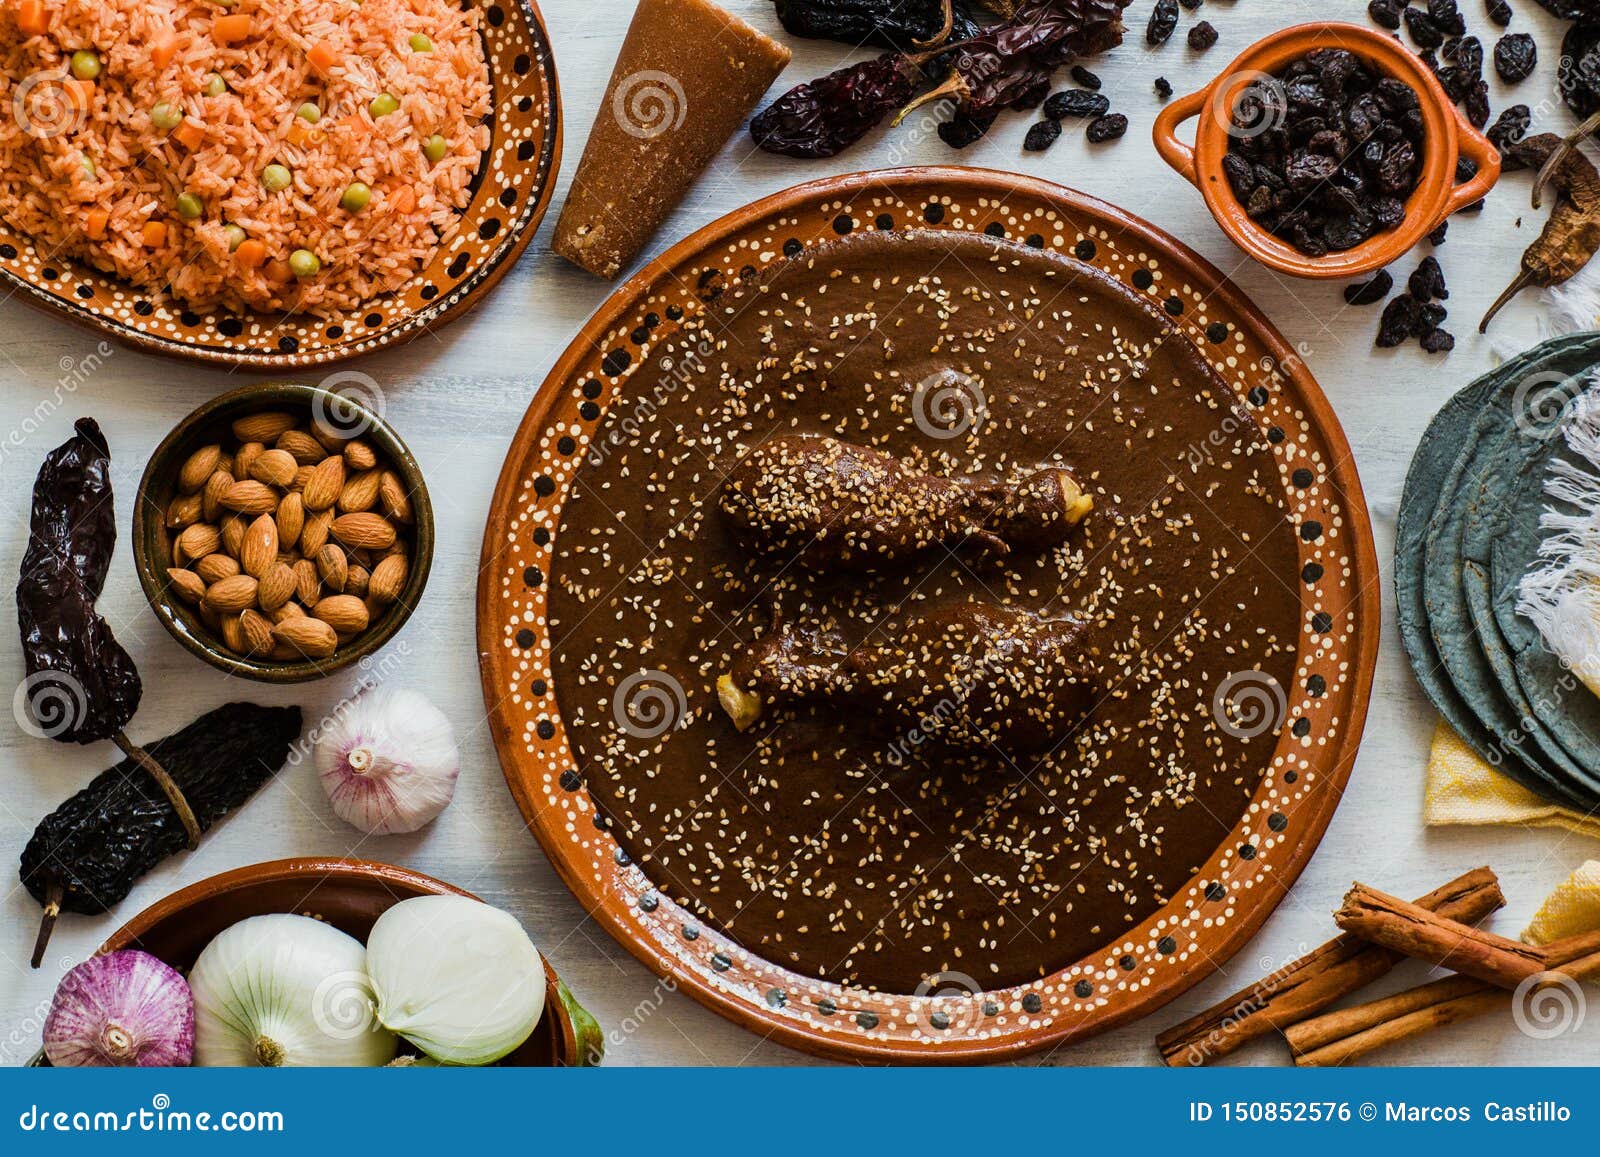 mole mexicano, poblano mole ingredients, mexican spicy food traditional in mexico